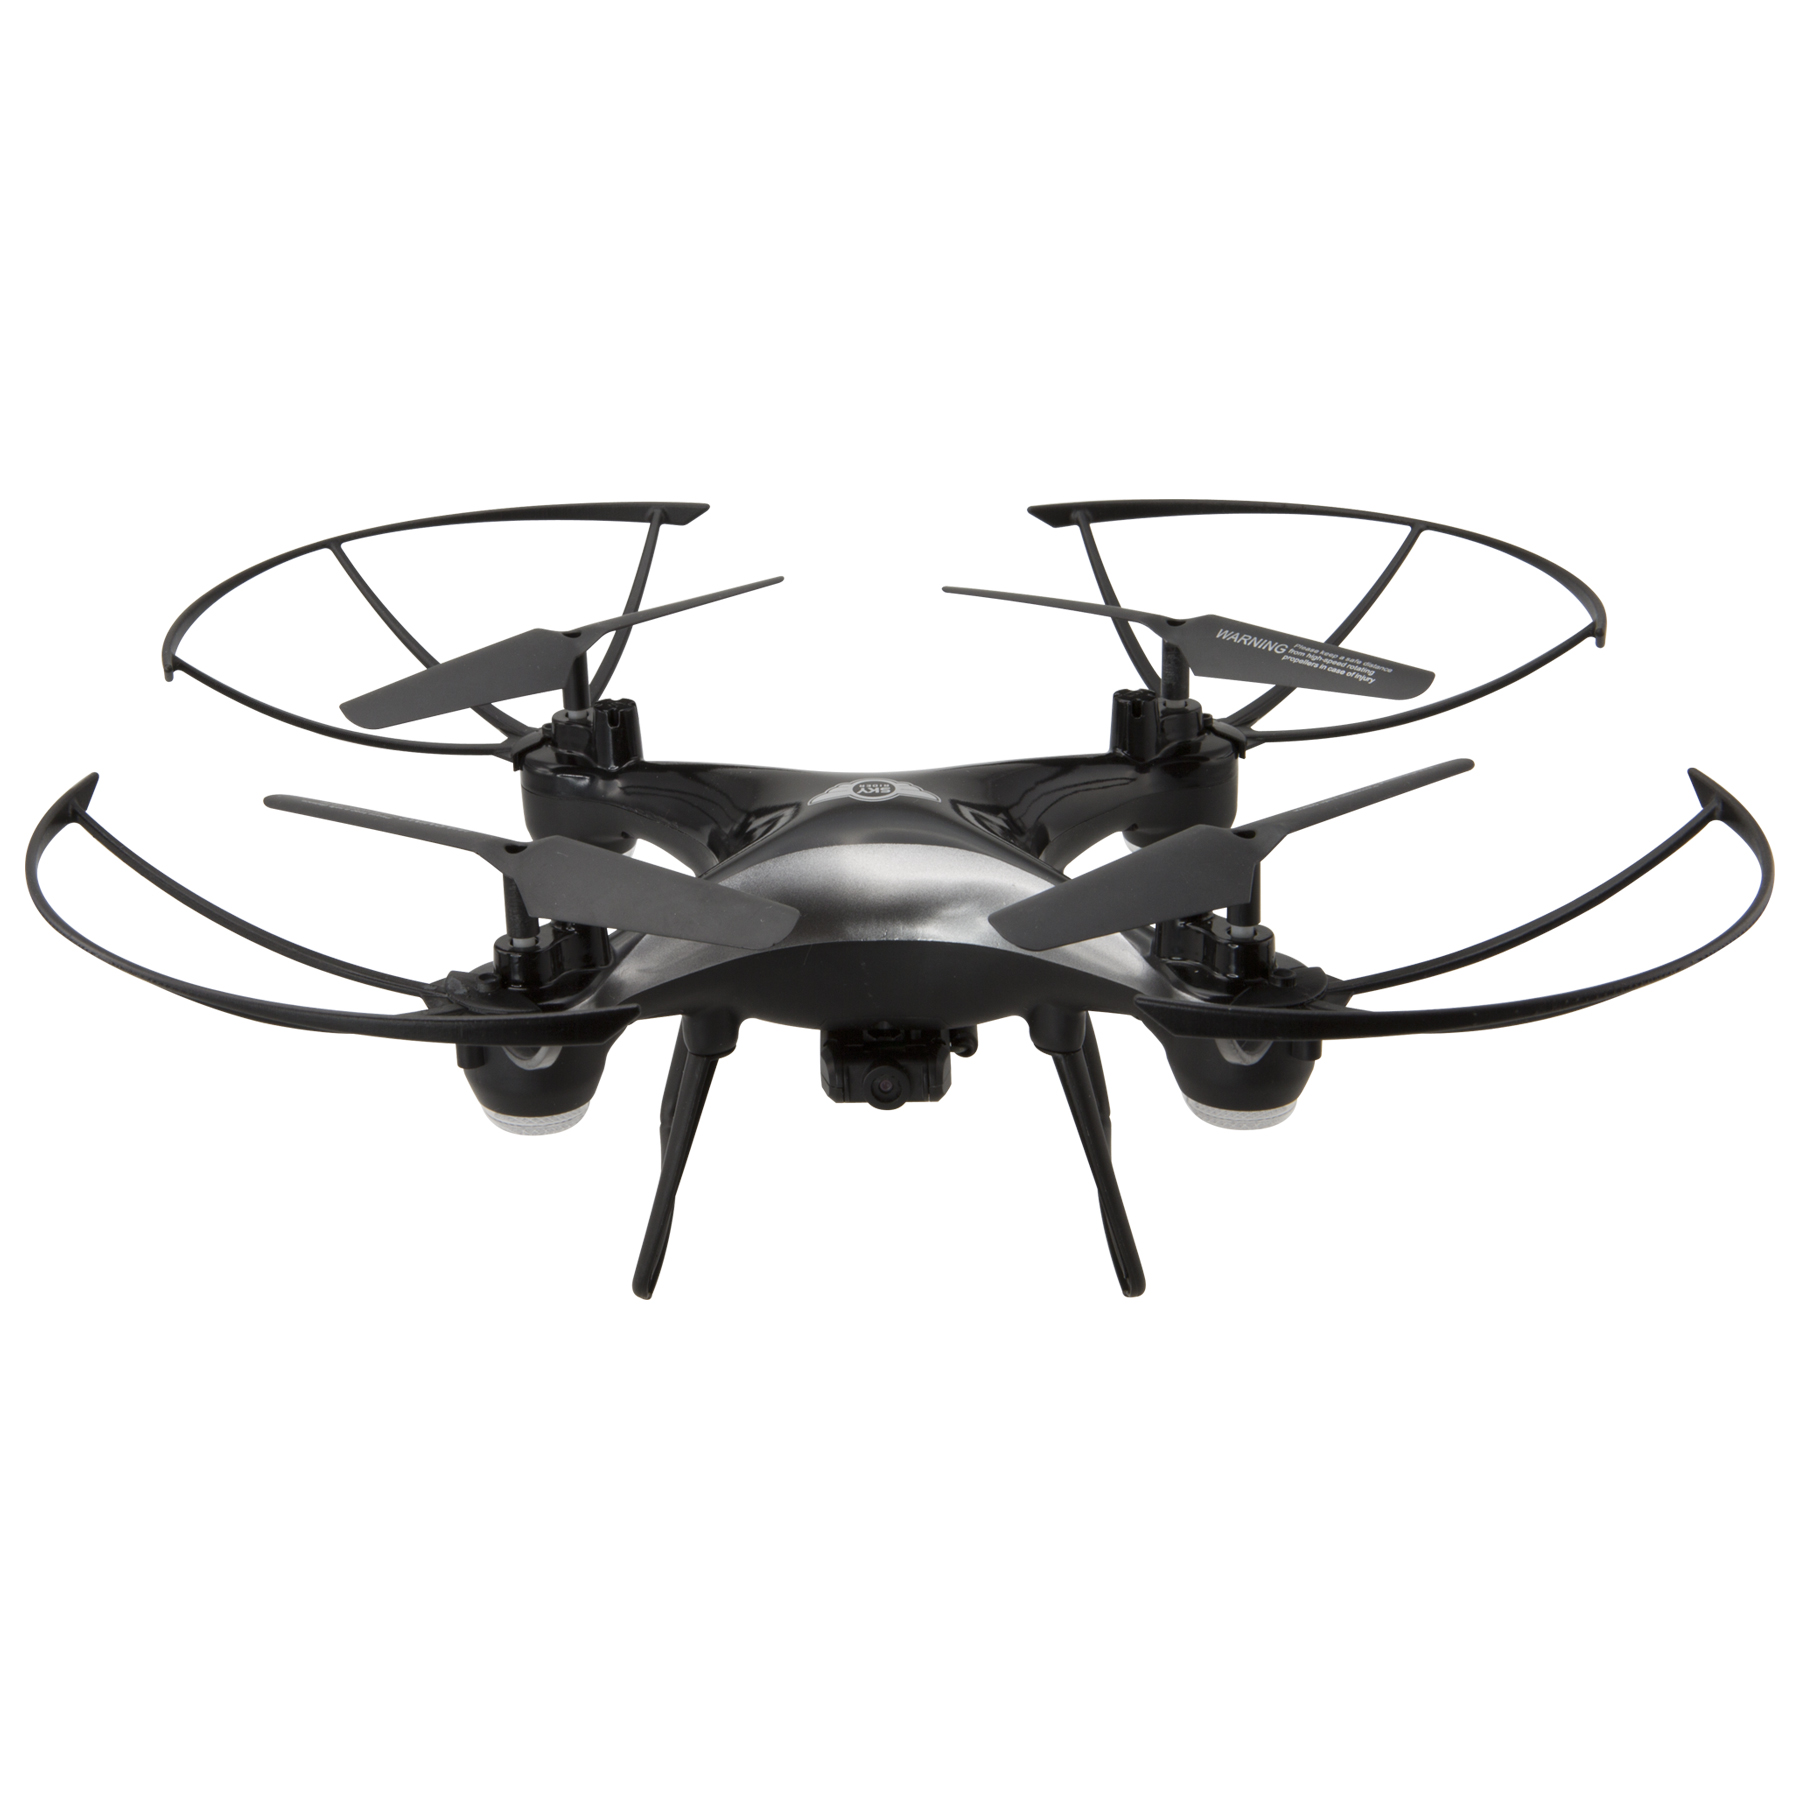 Sky Rider Thunderbird Quadcopter Drone with Wi-Fi Camera, DRW389, Black - image 5 of 5